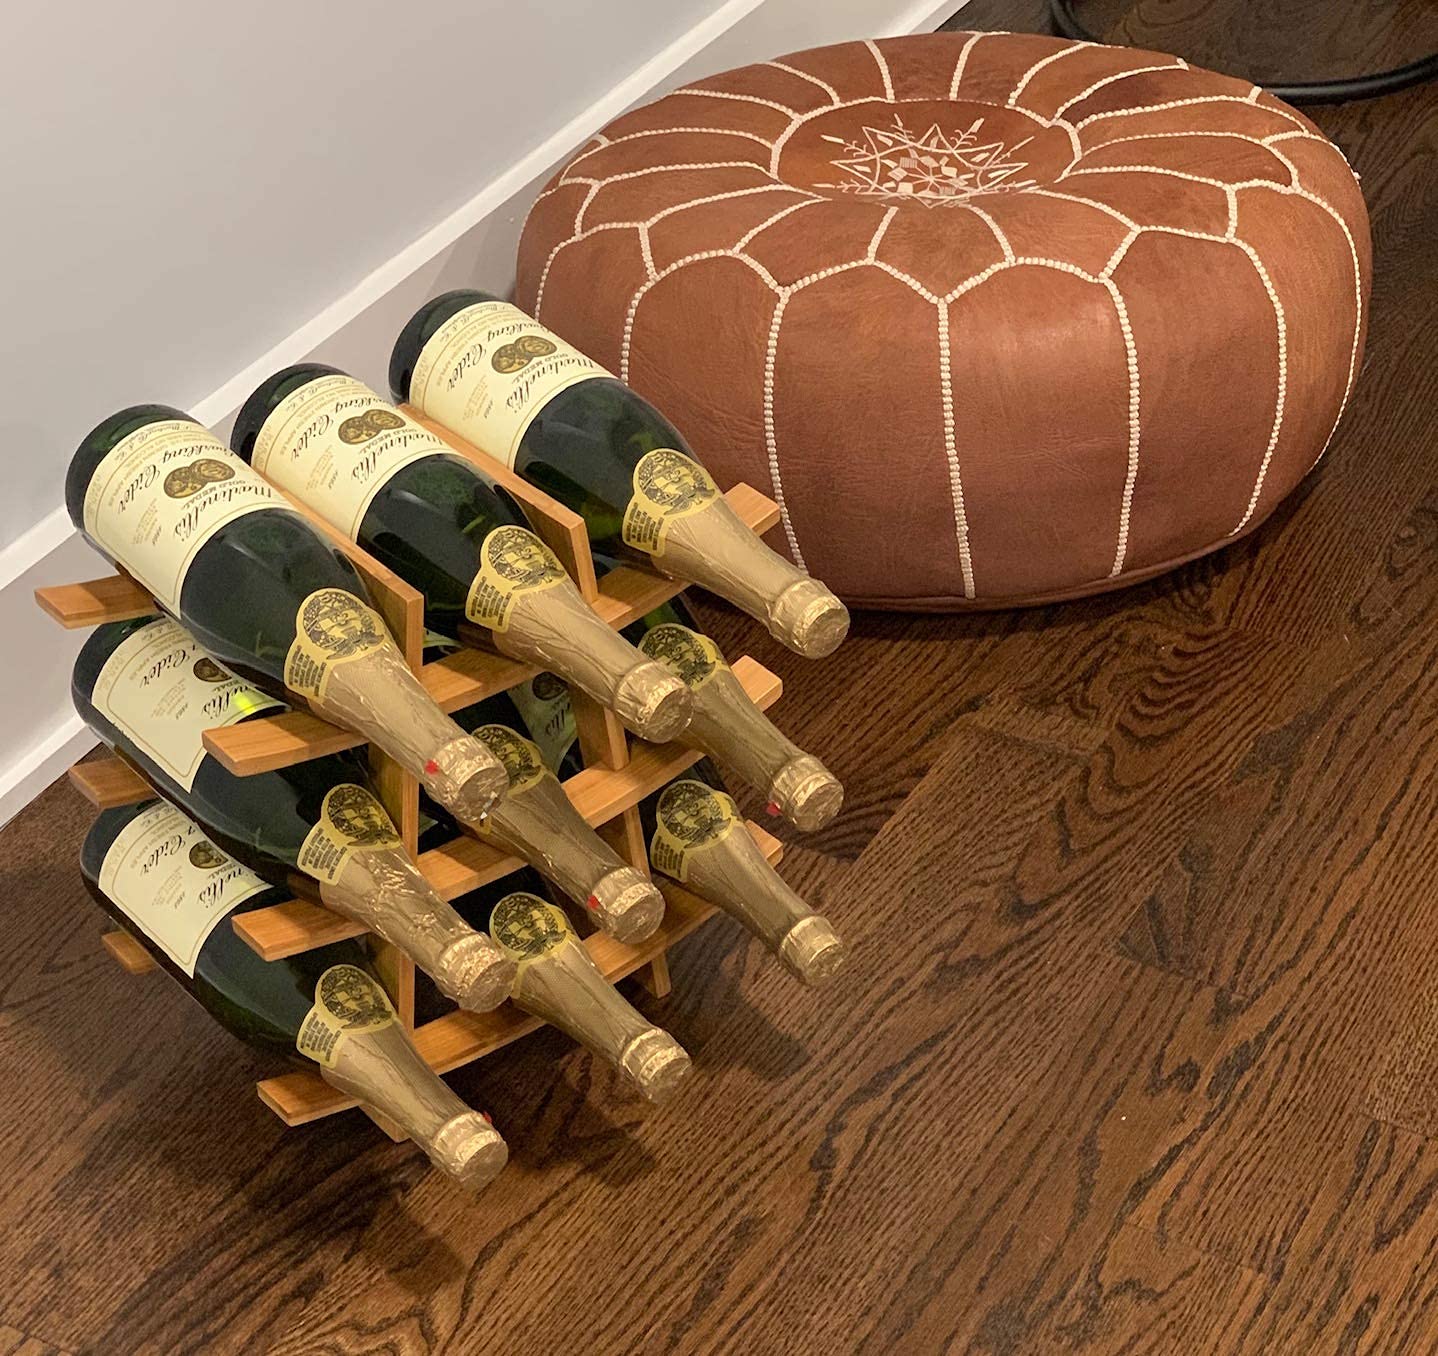 DECOMIL - 9 Bottle Samurai Style Stackable Modular Wine Rack Wine Storage Rack Solid Bamboo Wine Holder Display Shelves, Wobble-Free (9 Bottle Capacity - Samurai Style Capacity)